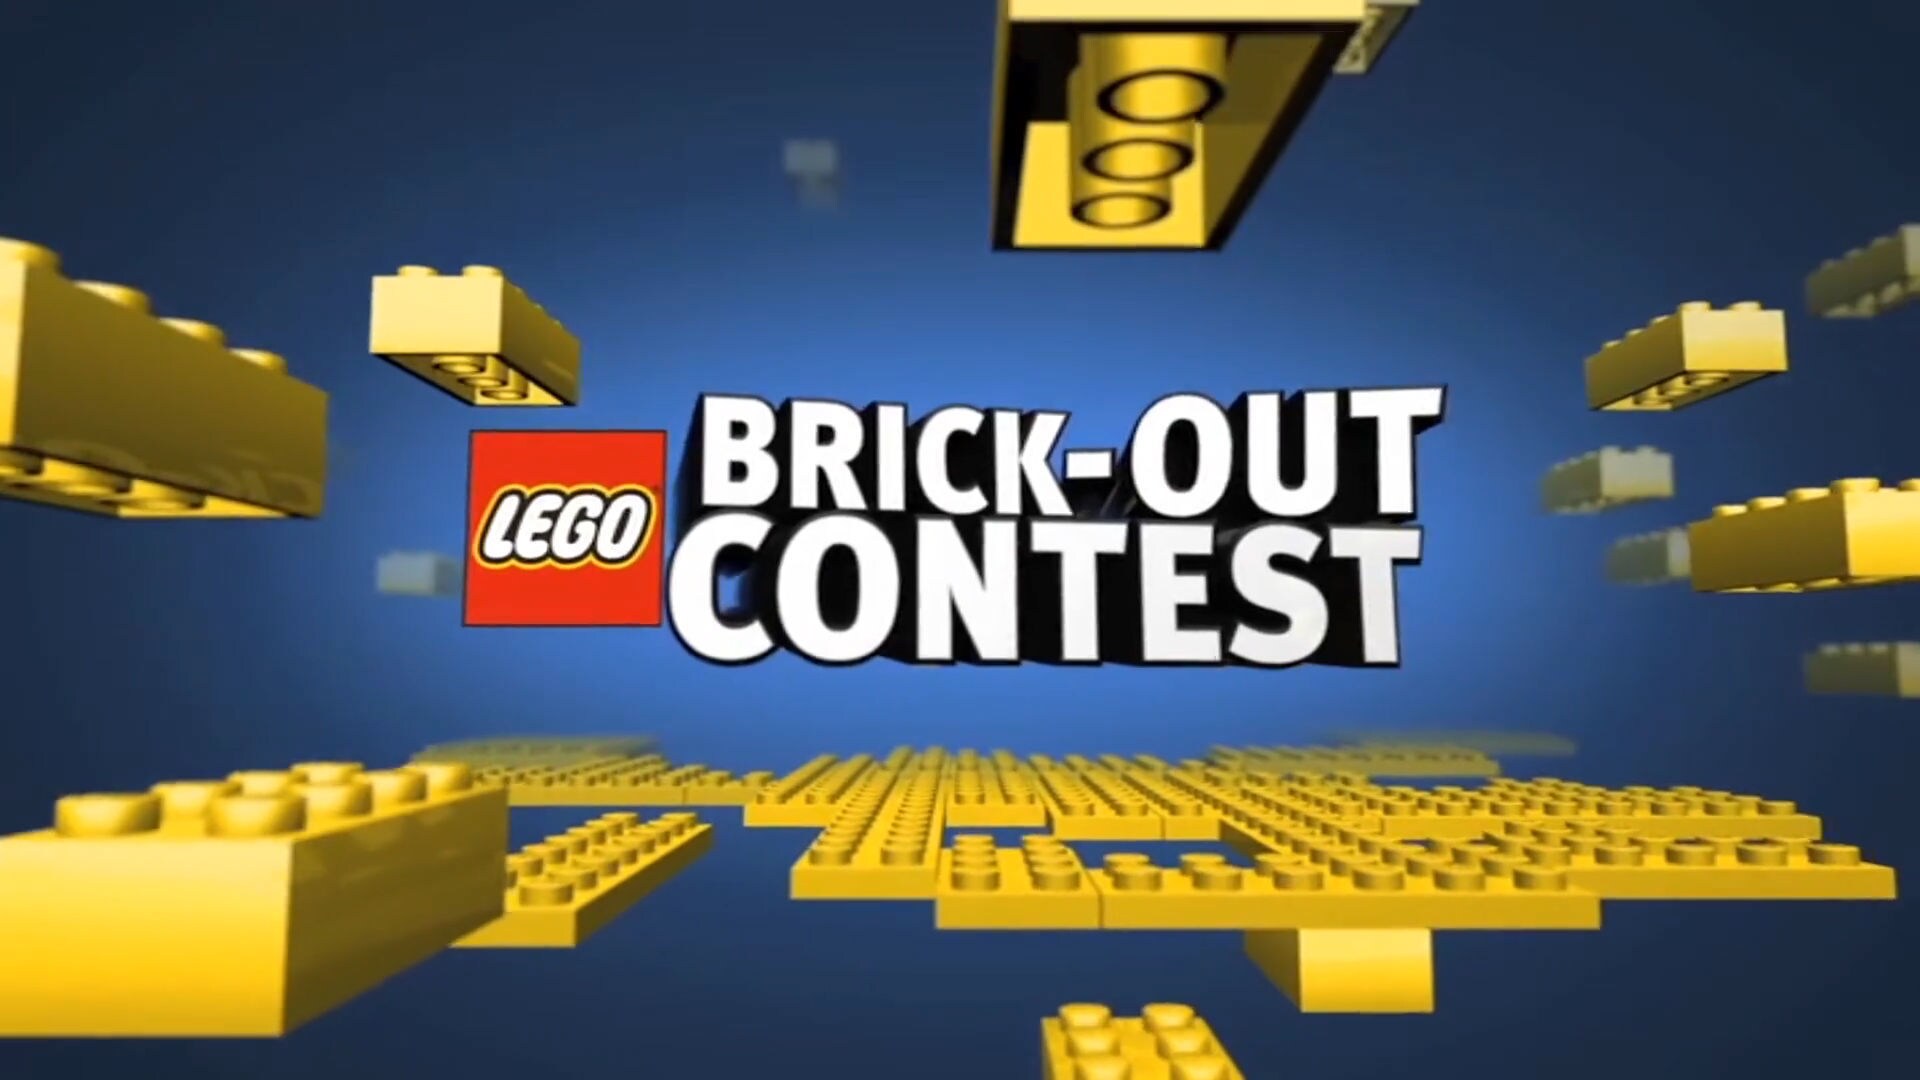 LEGO มาเลเซีย ผู้สนับสนุนหลัก “LEGO Brick-out Saturdays”